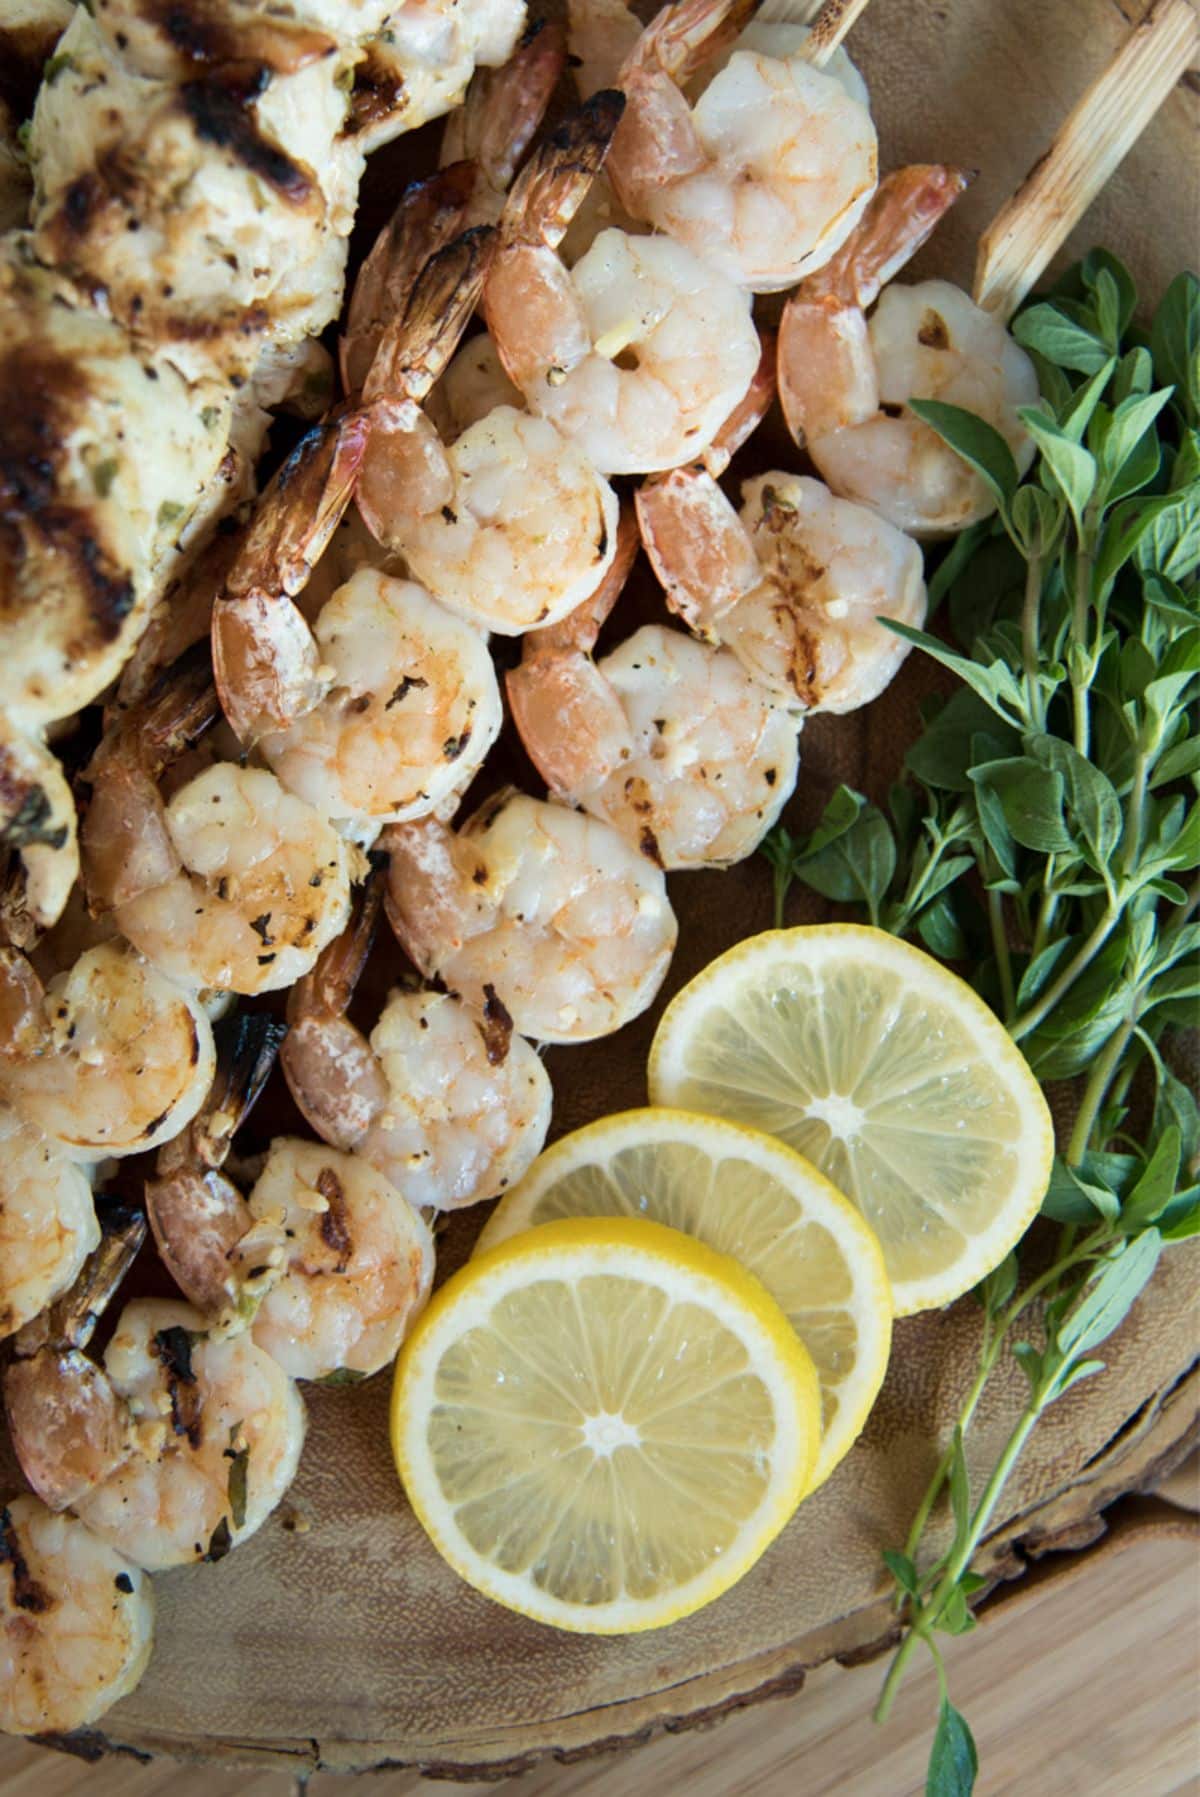 Lemon-Oregano Shrimp And Chicken Skewers Recipe Preparation